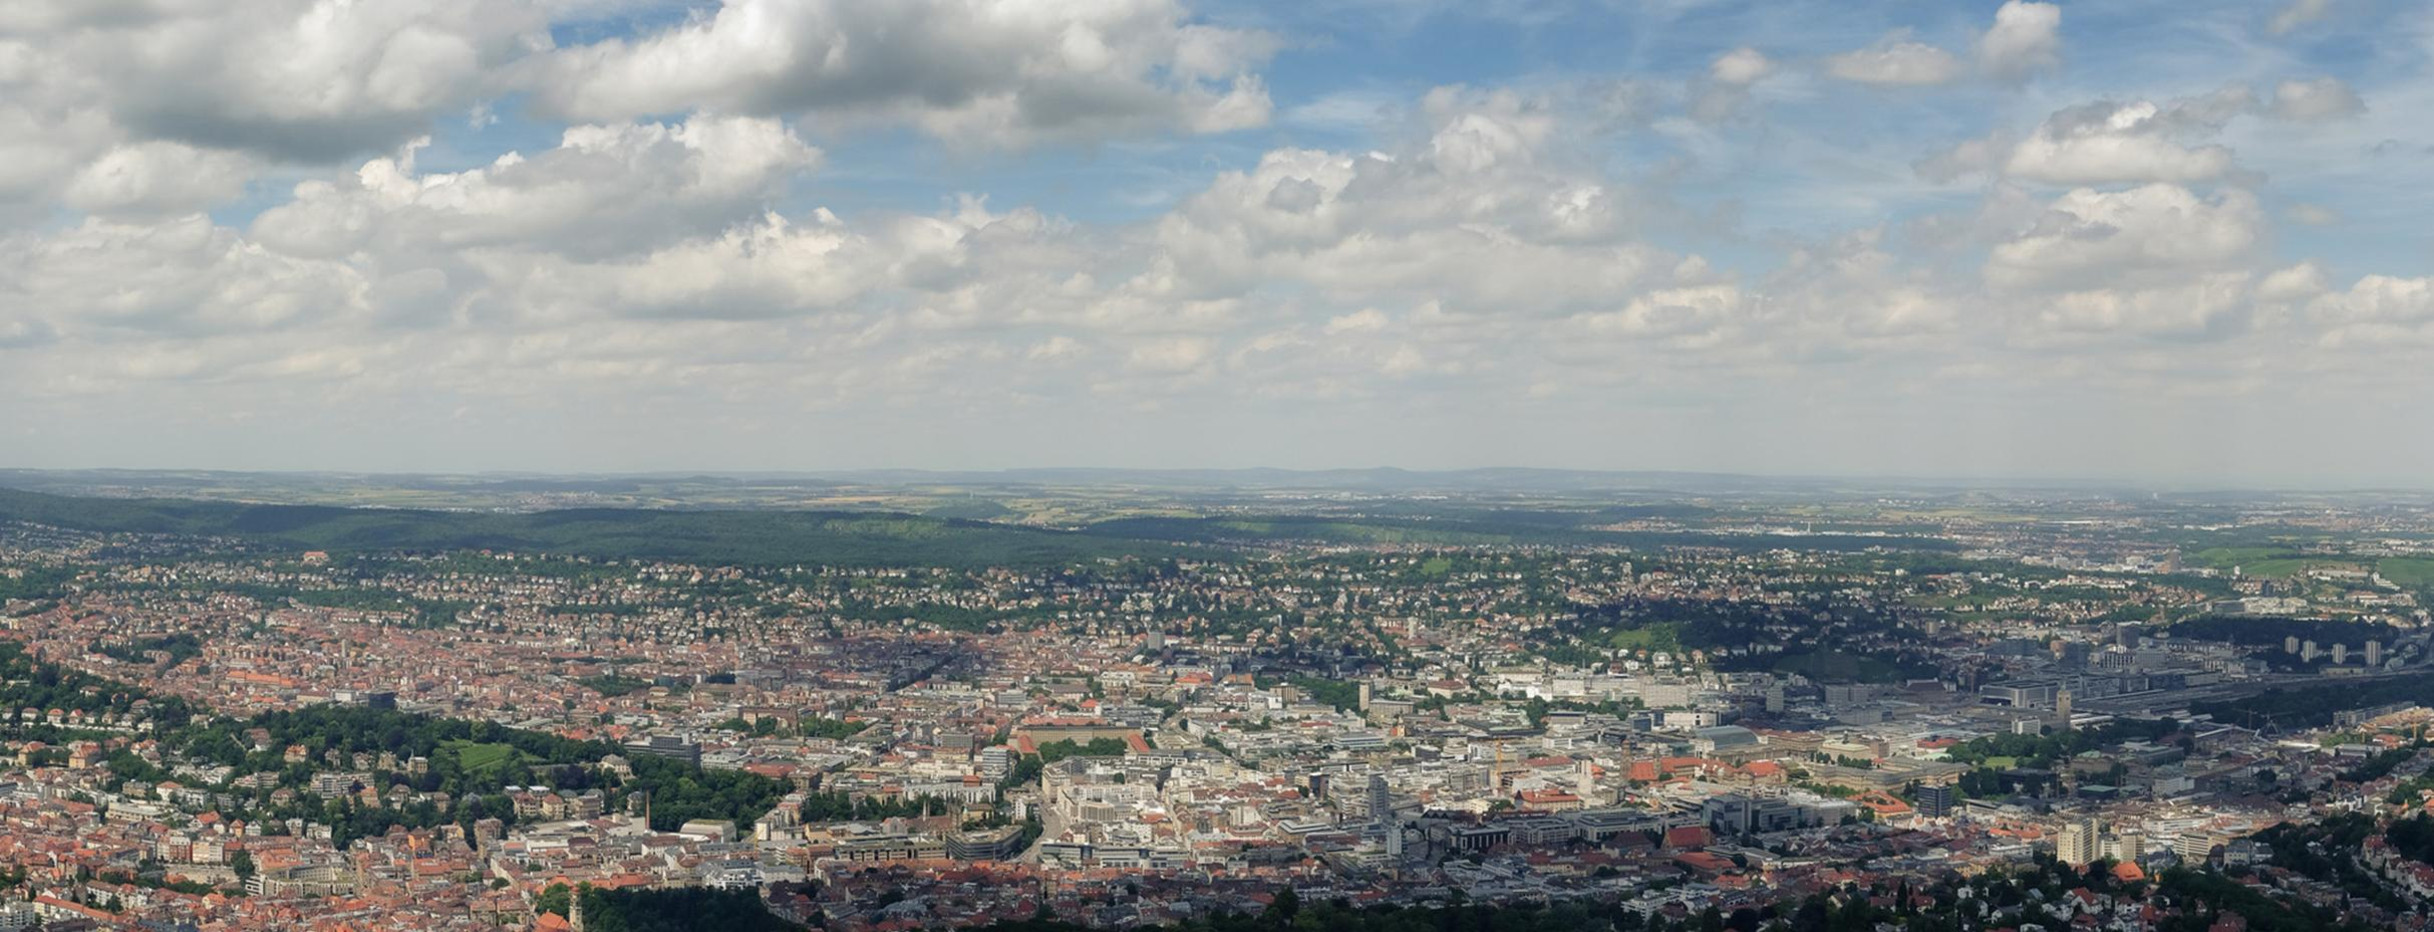 Blick auf Stuttgart (Luftbild) (Bild: Fotolia.com)